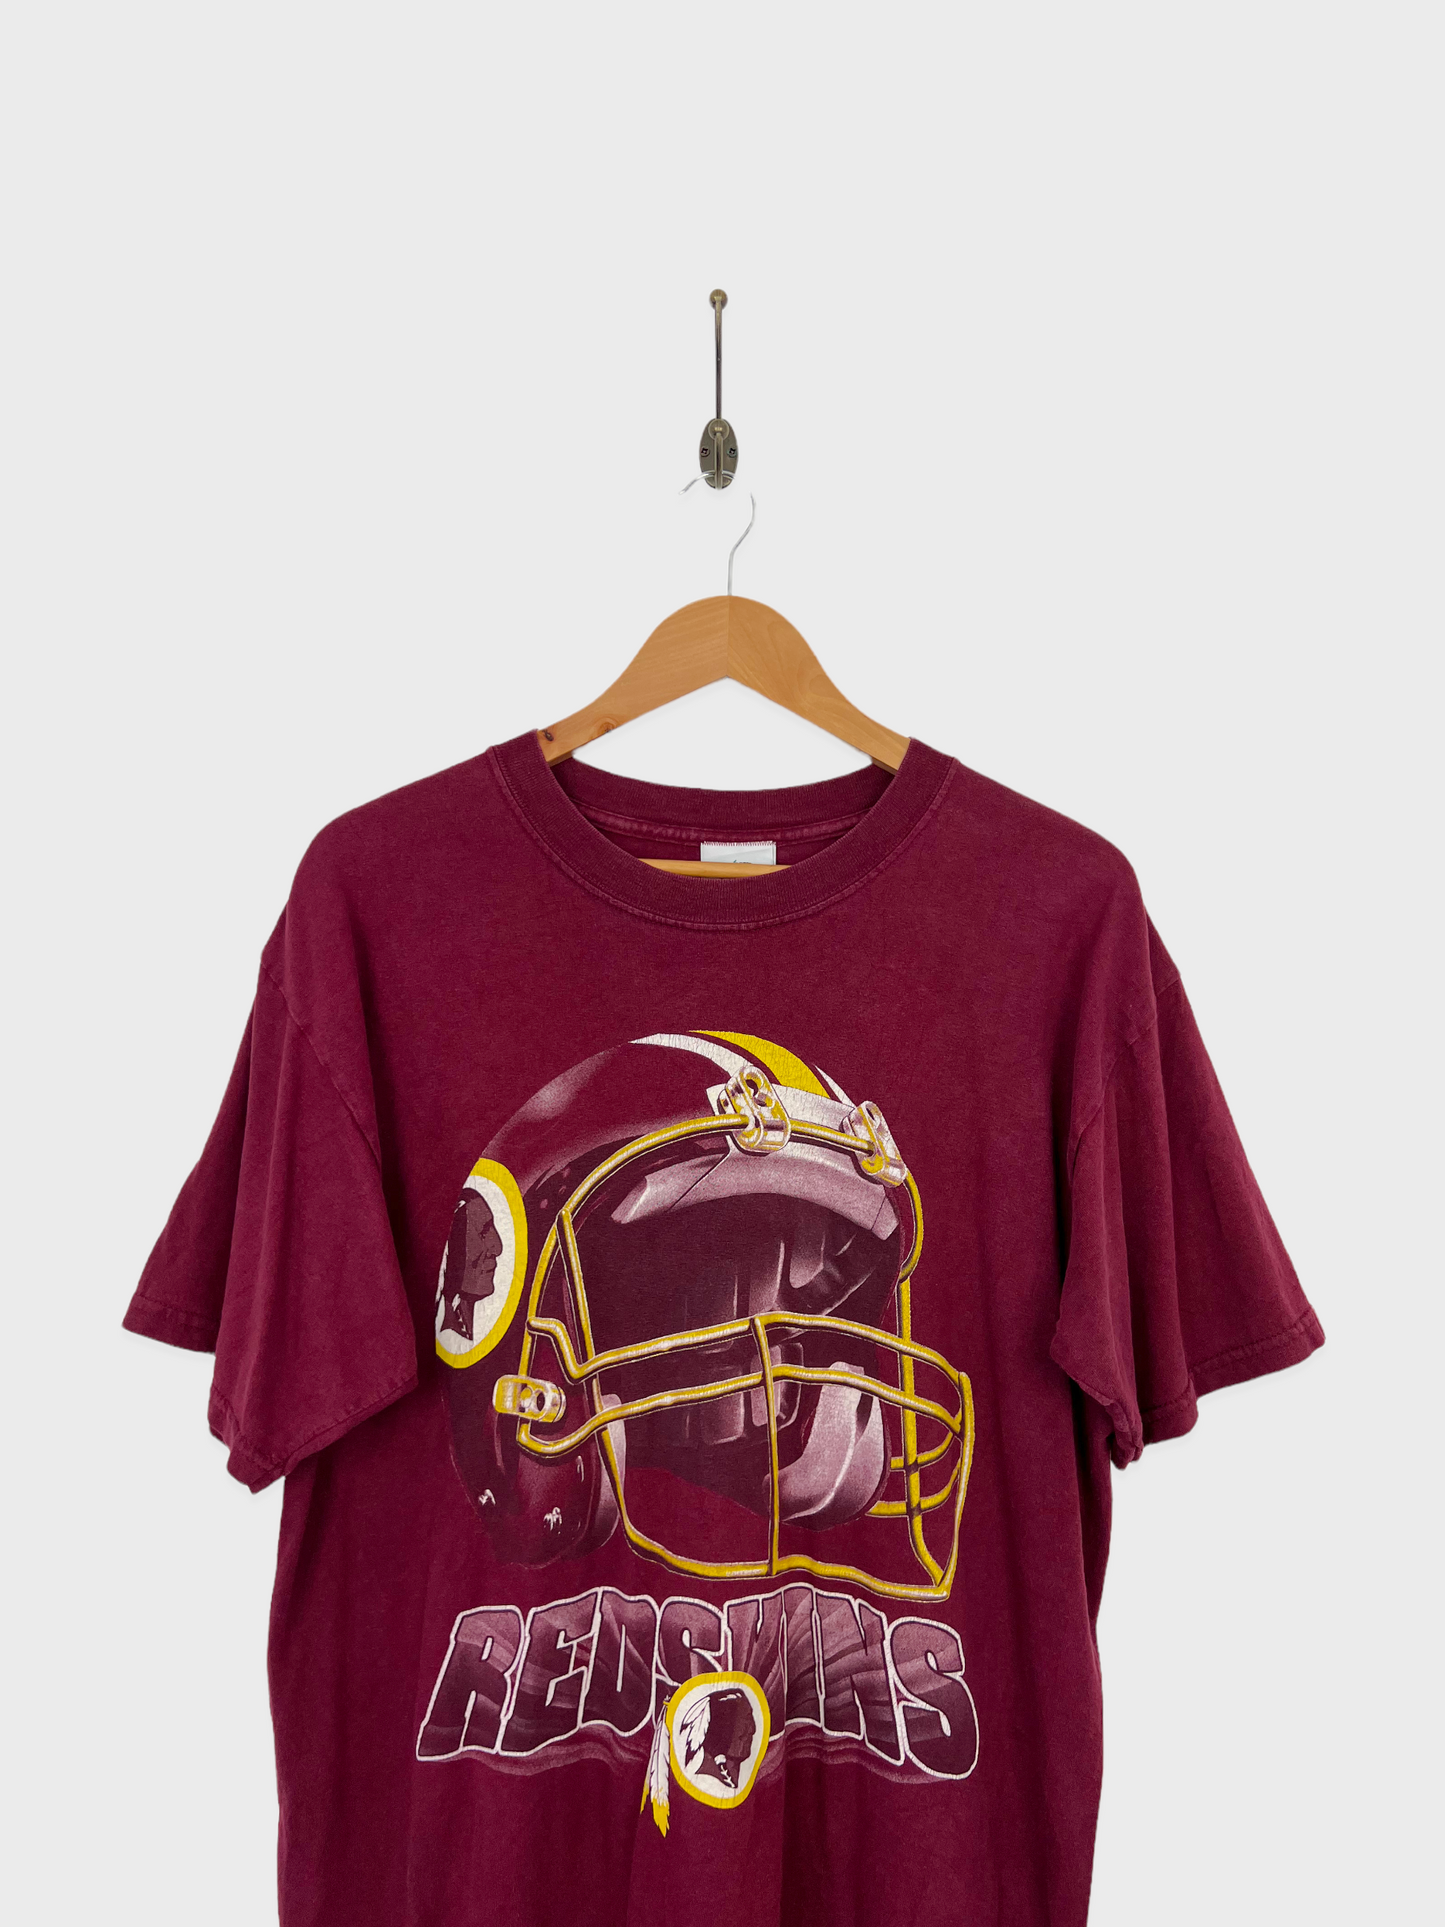 90's Washington Redskins NFL Vintage T-Shirt Size M-L